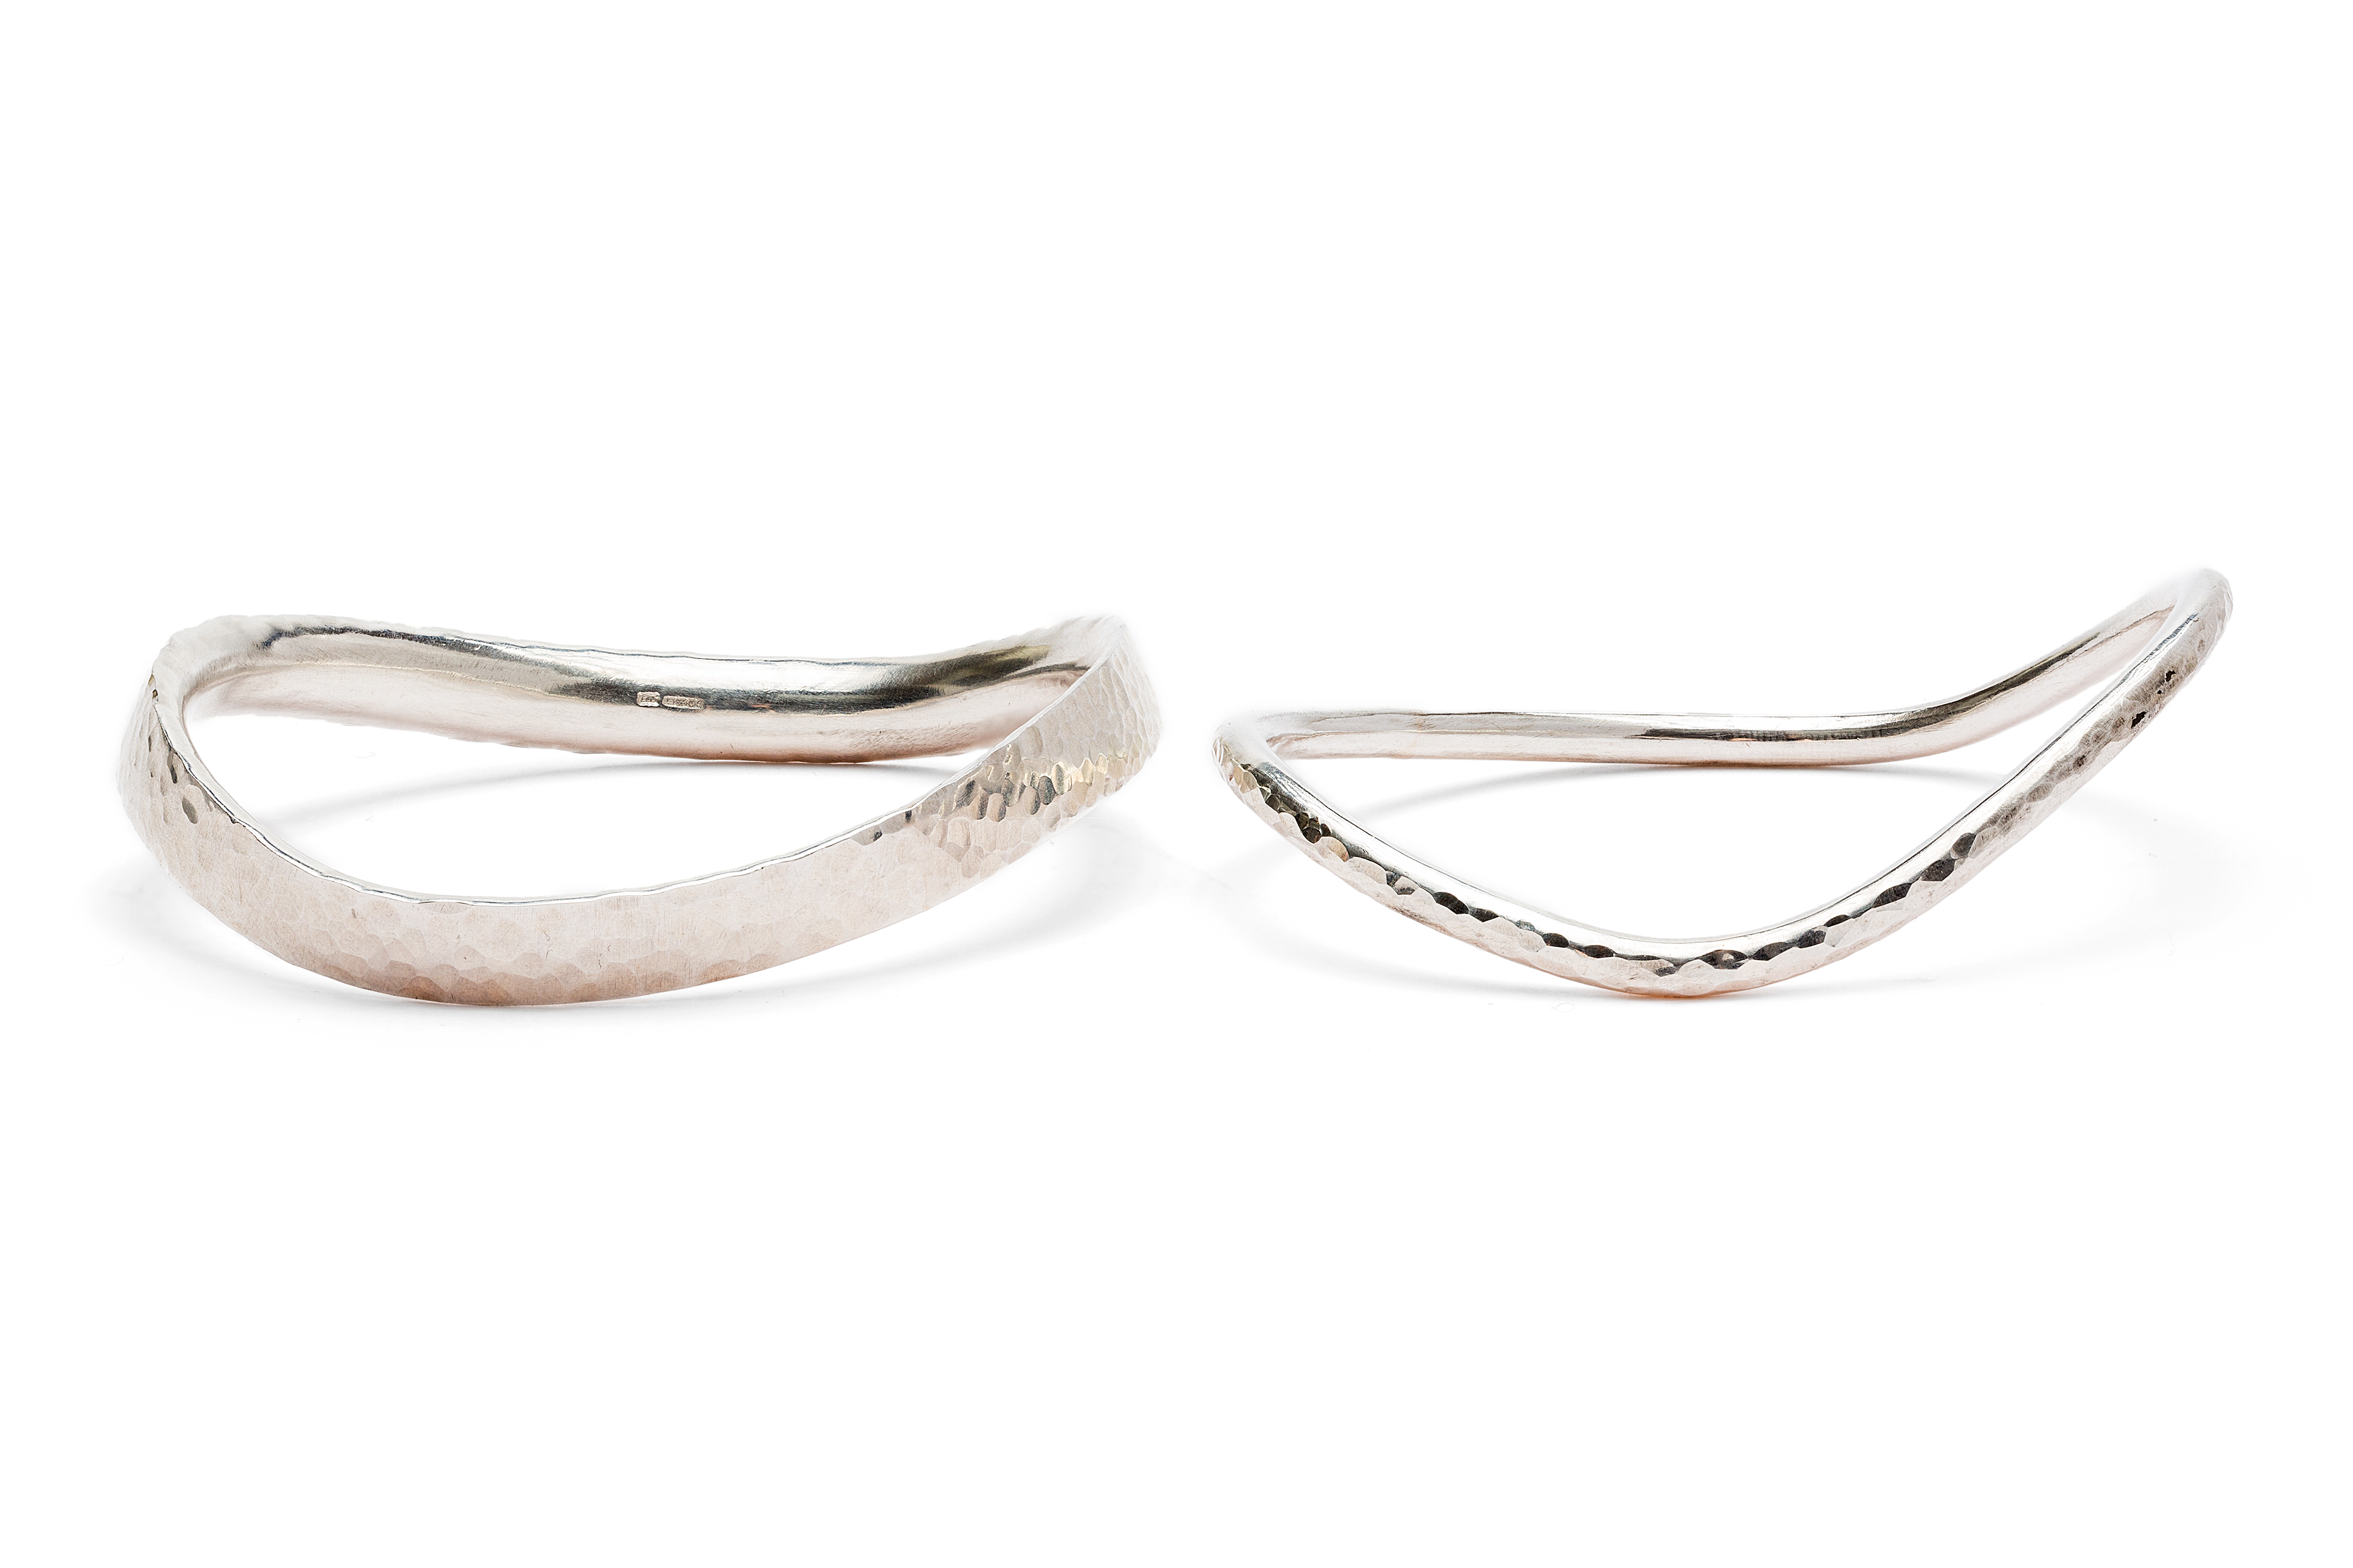 Vortex & Whirl silver bangles